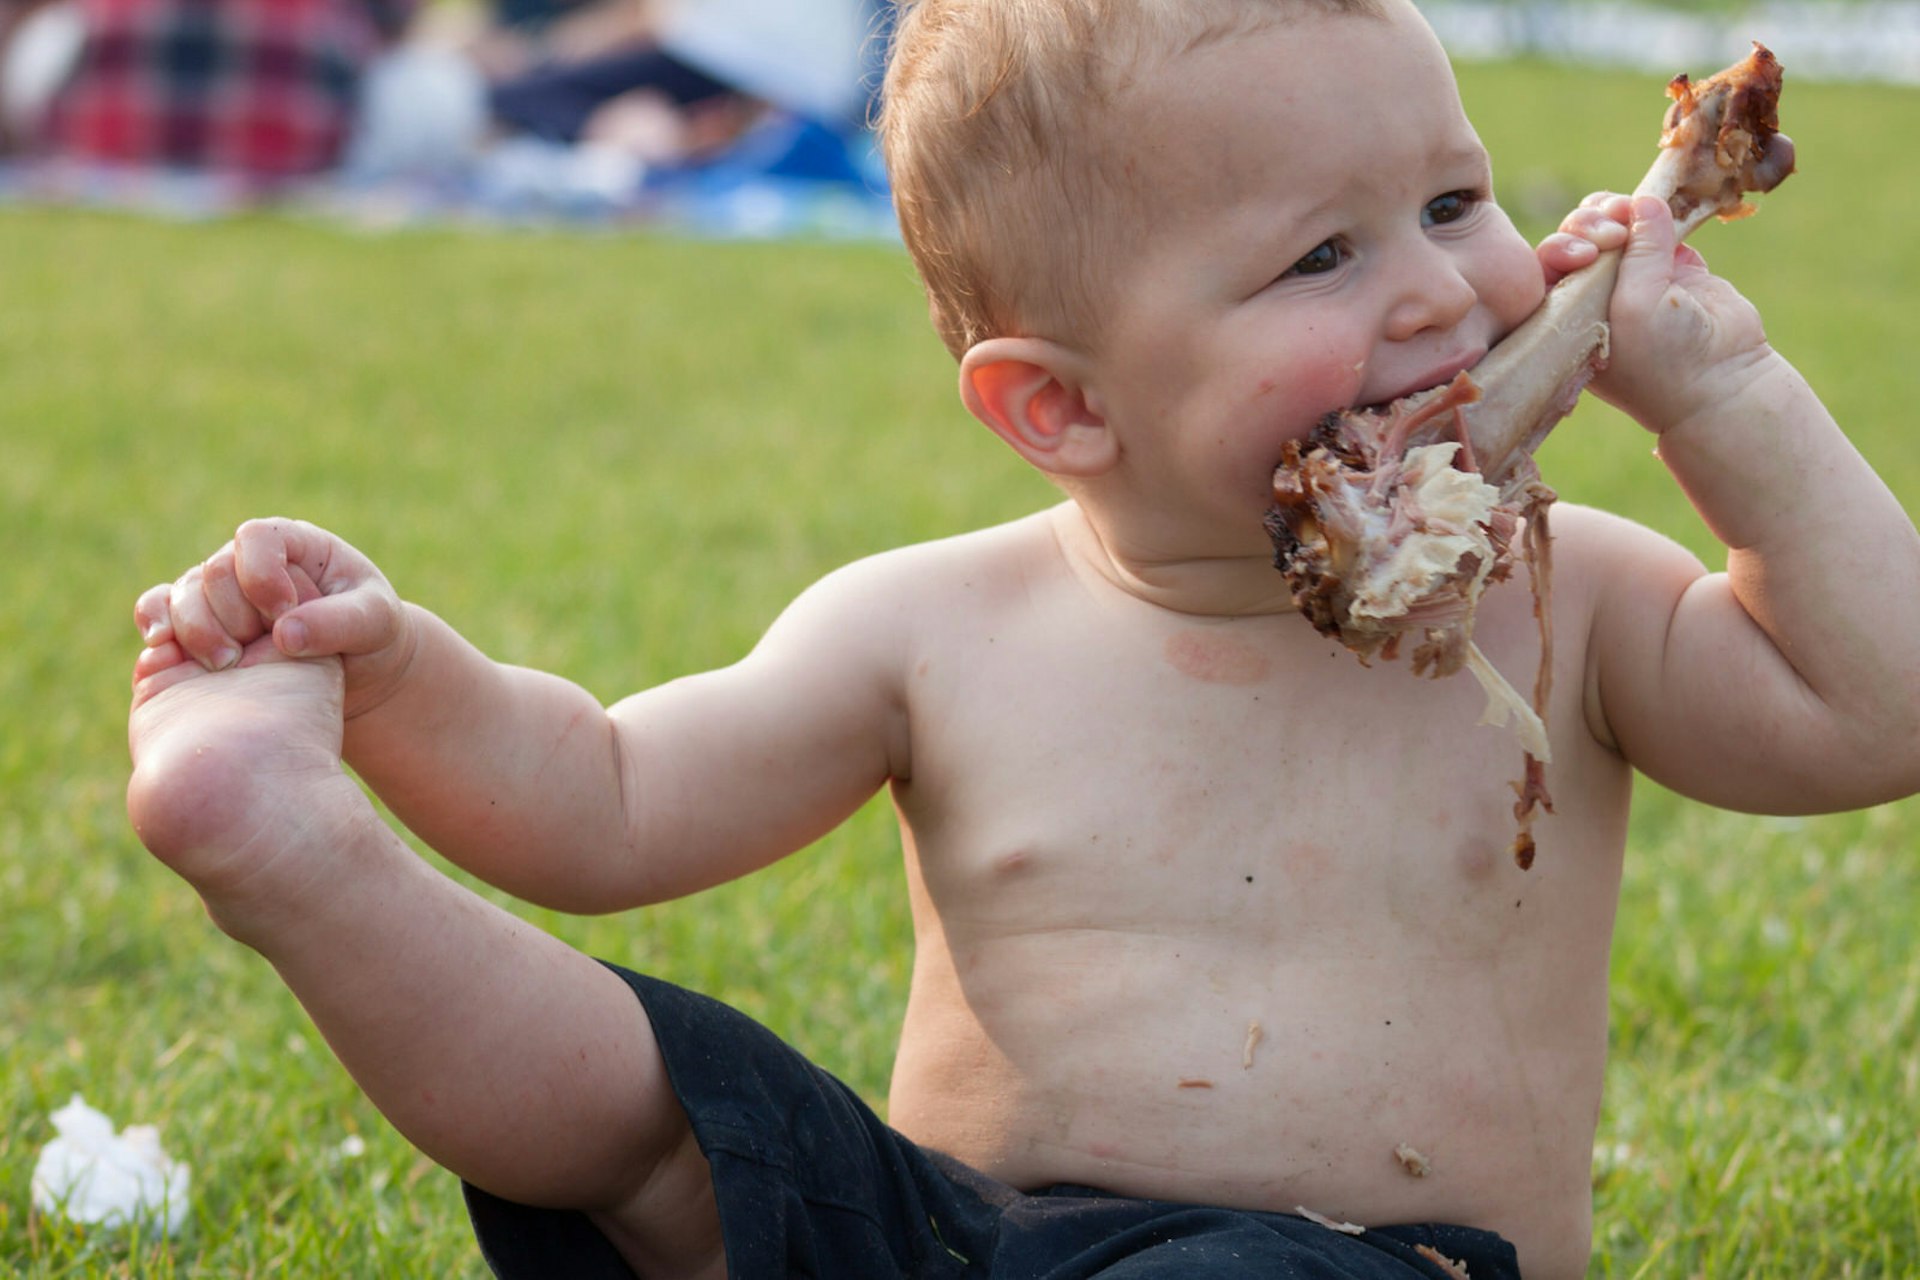 A baby eating a chicken leg at a festival© Olga Enger / Shutterstock